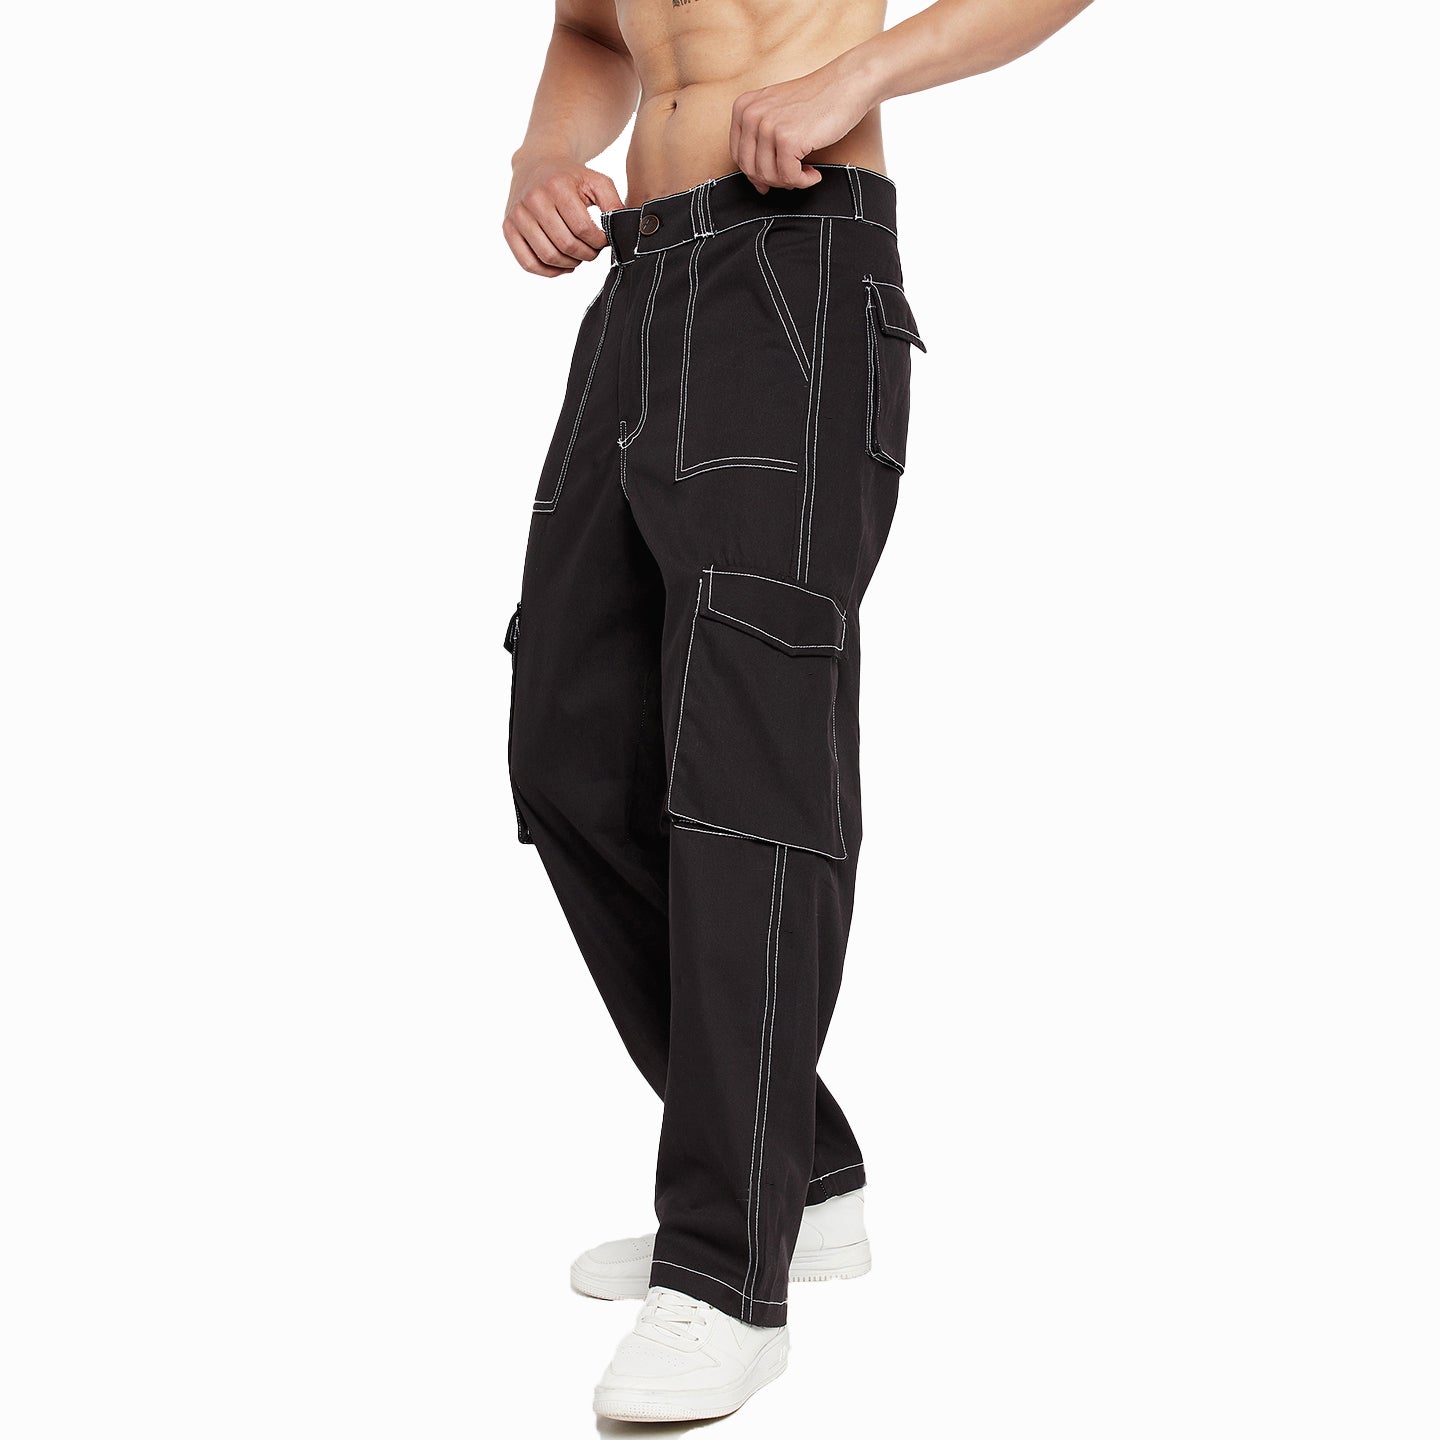 Aggregate more than 76 black baggy pants mens best